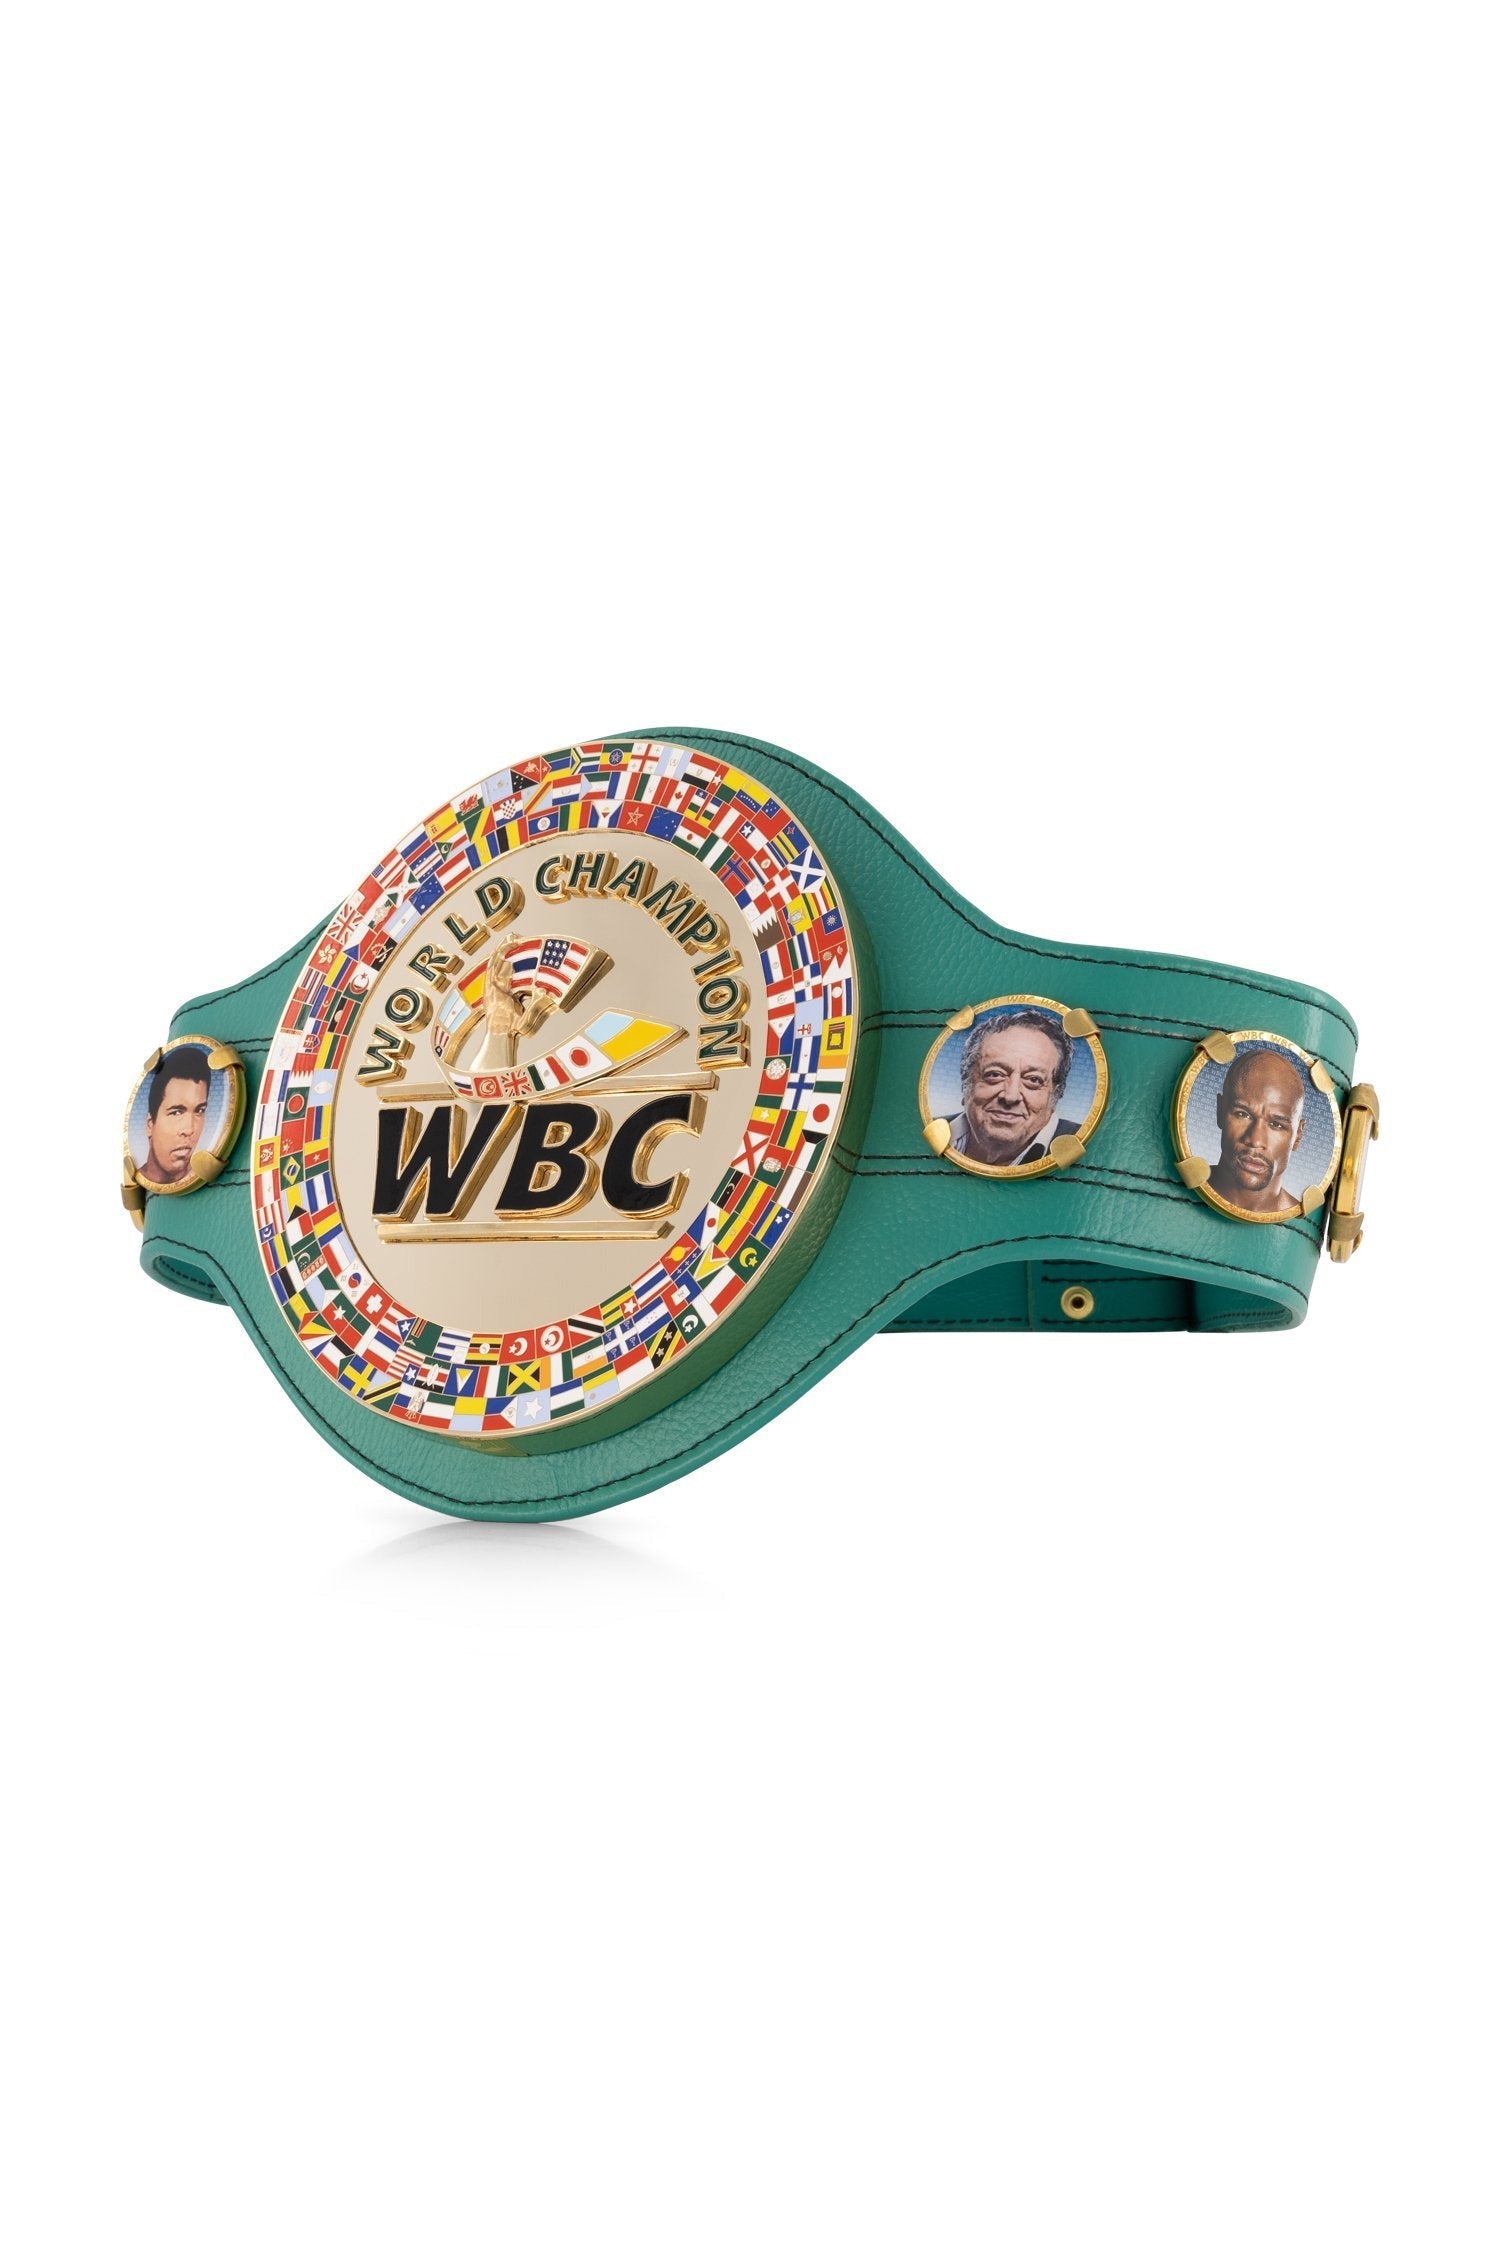 WBC Store Replica Belts WBC Replica Championship Belt Memorabilia Floyd Mayweather